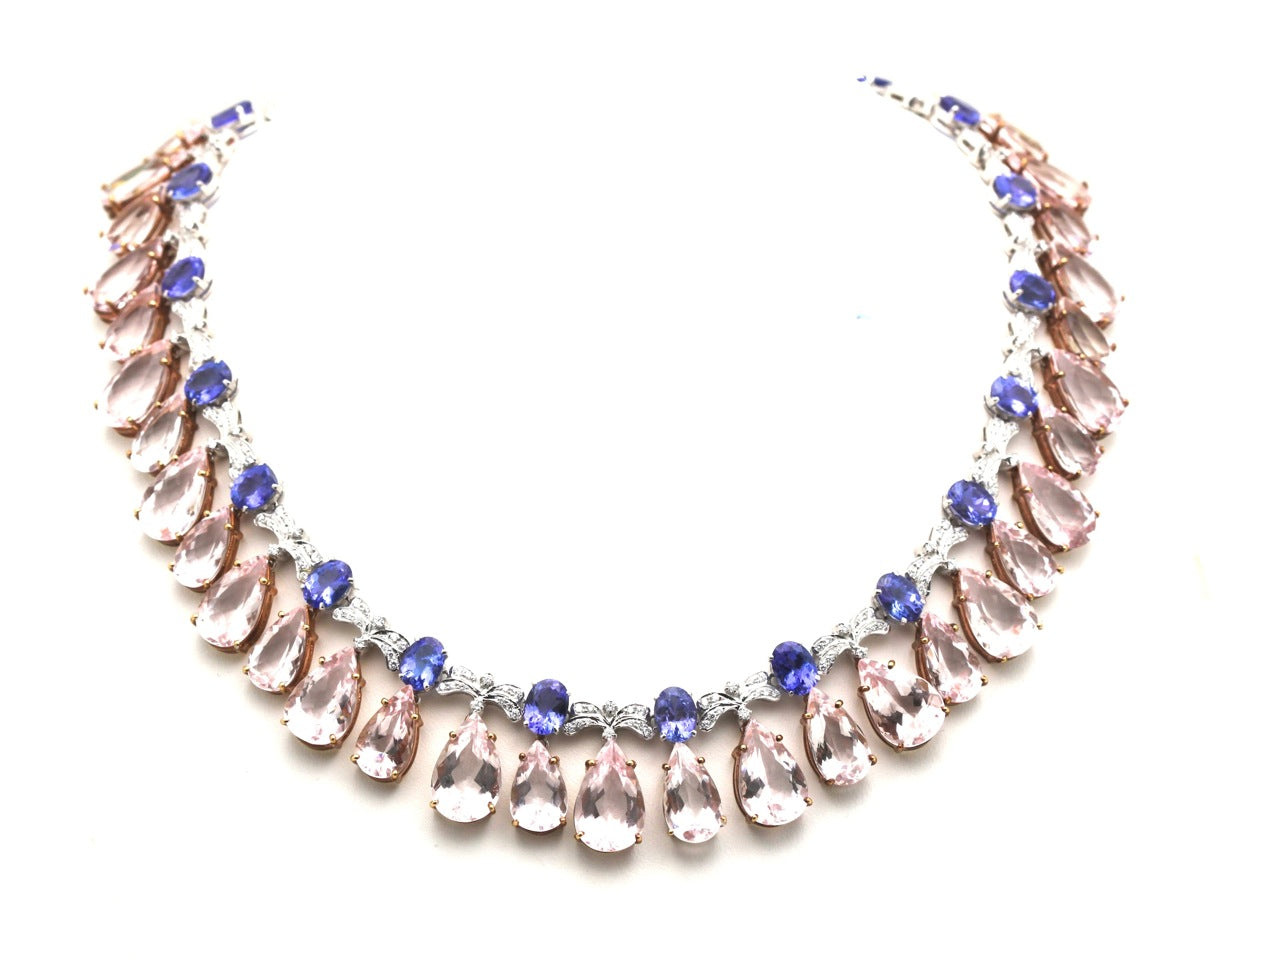 Morganite, Tanzanite And Diamond Necklace In 18K Rose Gold / White Gold